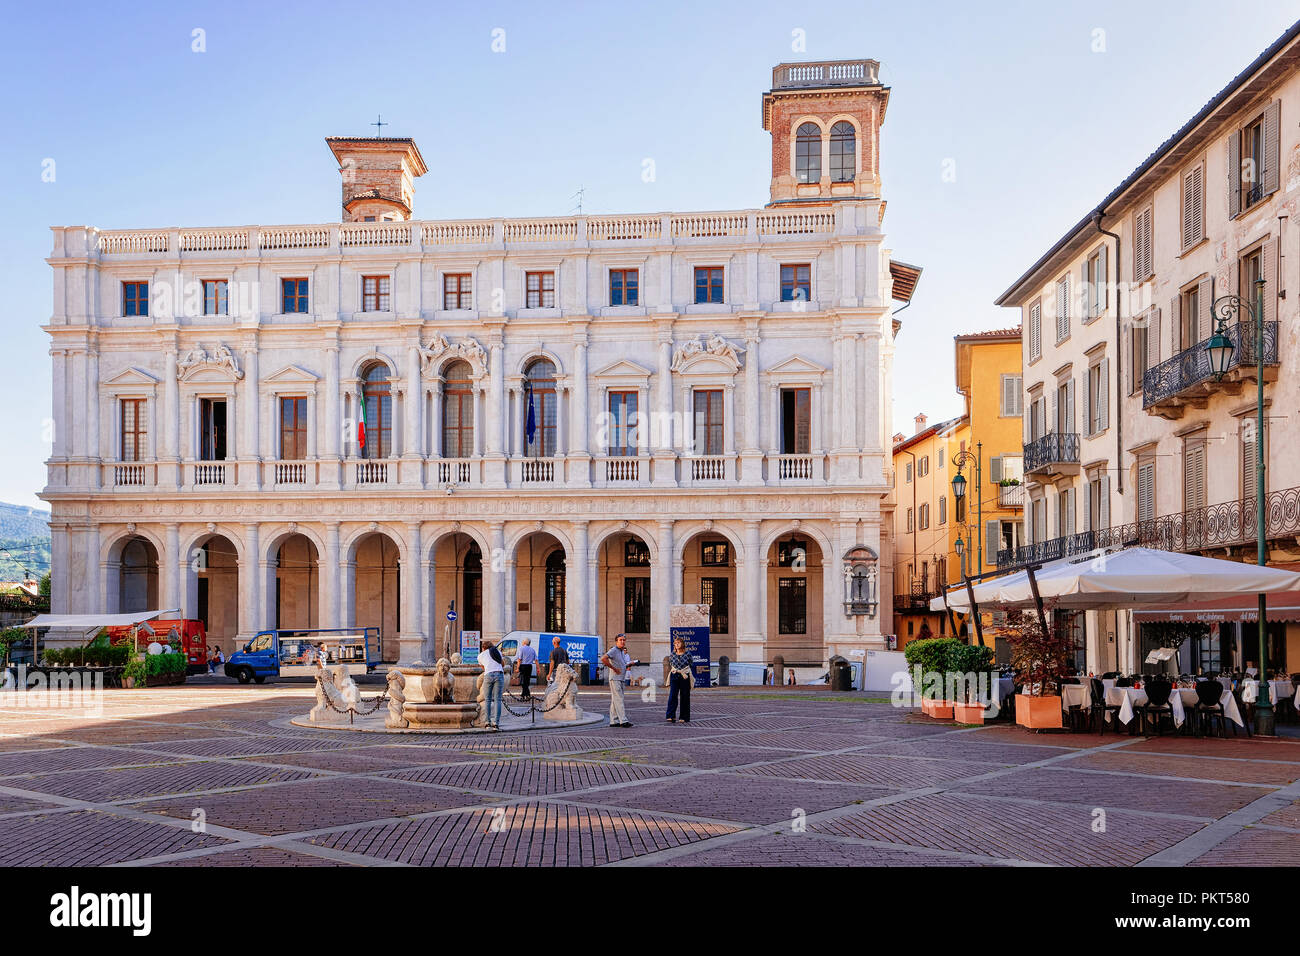 Bergamo, Italien - 23 August 2016: Palazzo Vecchia Square und Bibliothek Biblioteca Civica Angelo Mai in Bergamo in der Oberen Stadt in der Lombardei in Italien Stockfoto